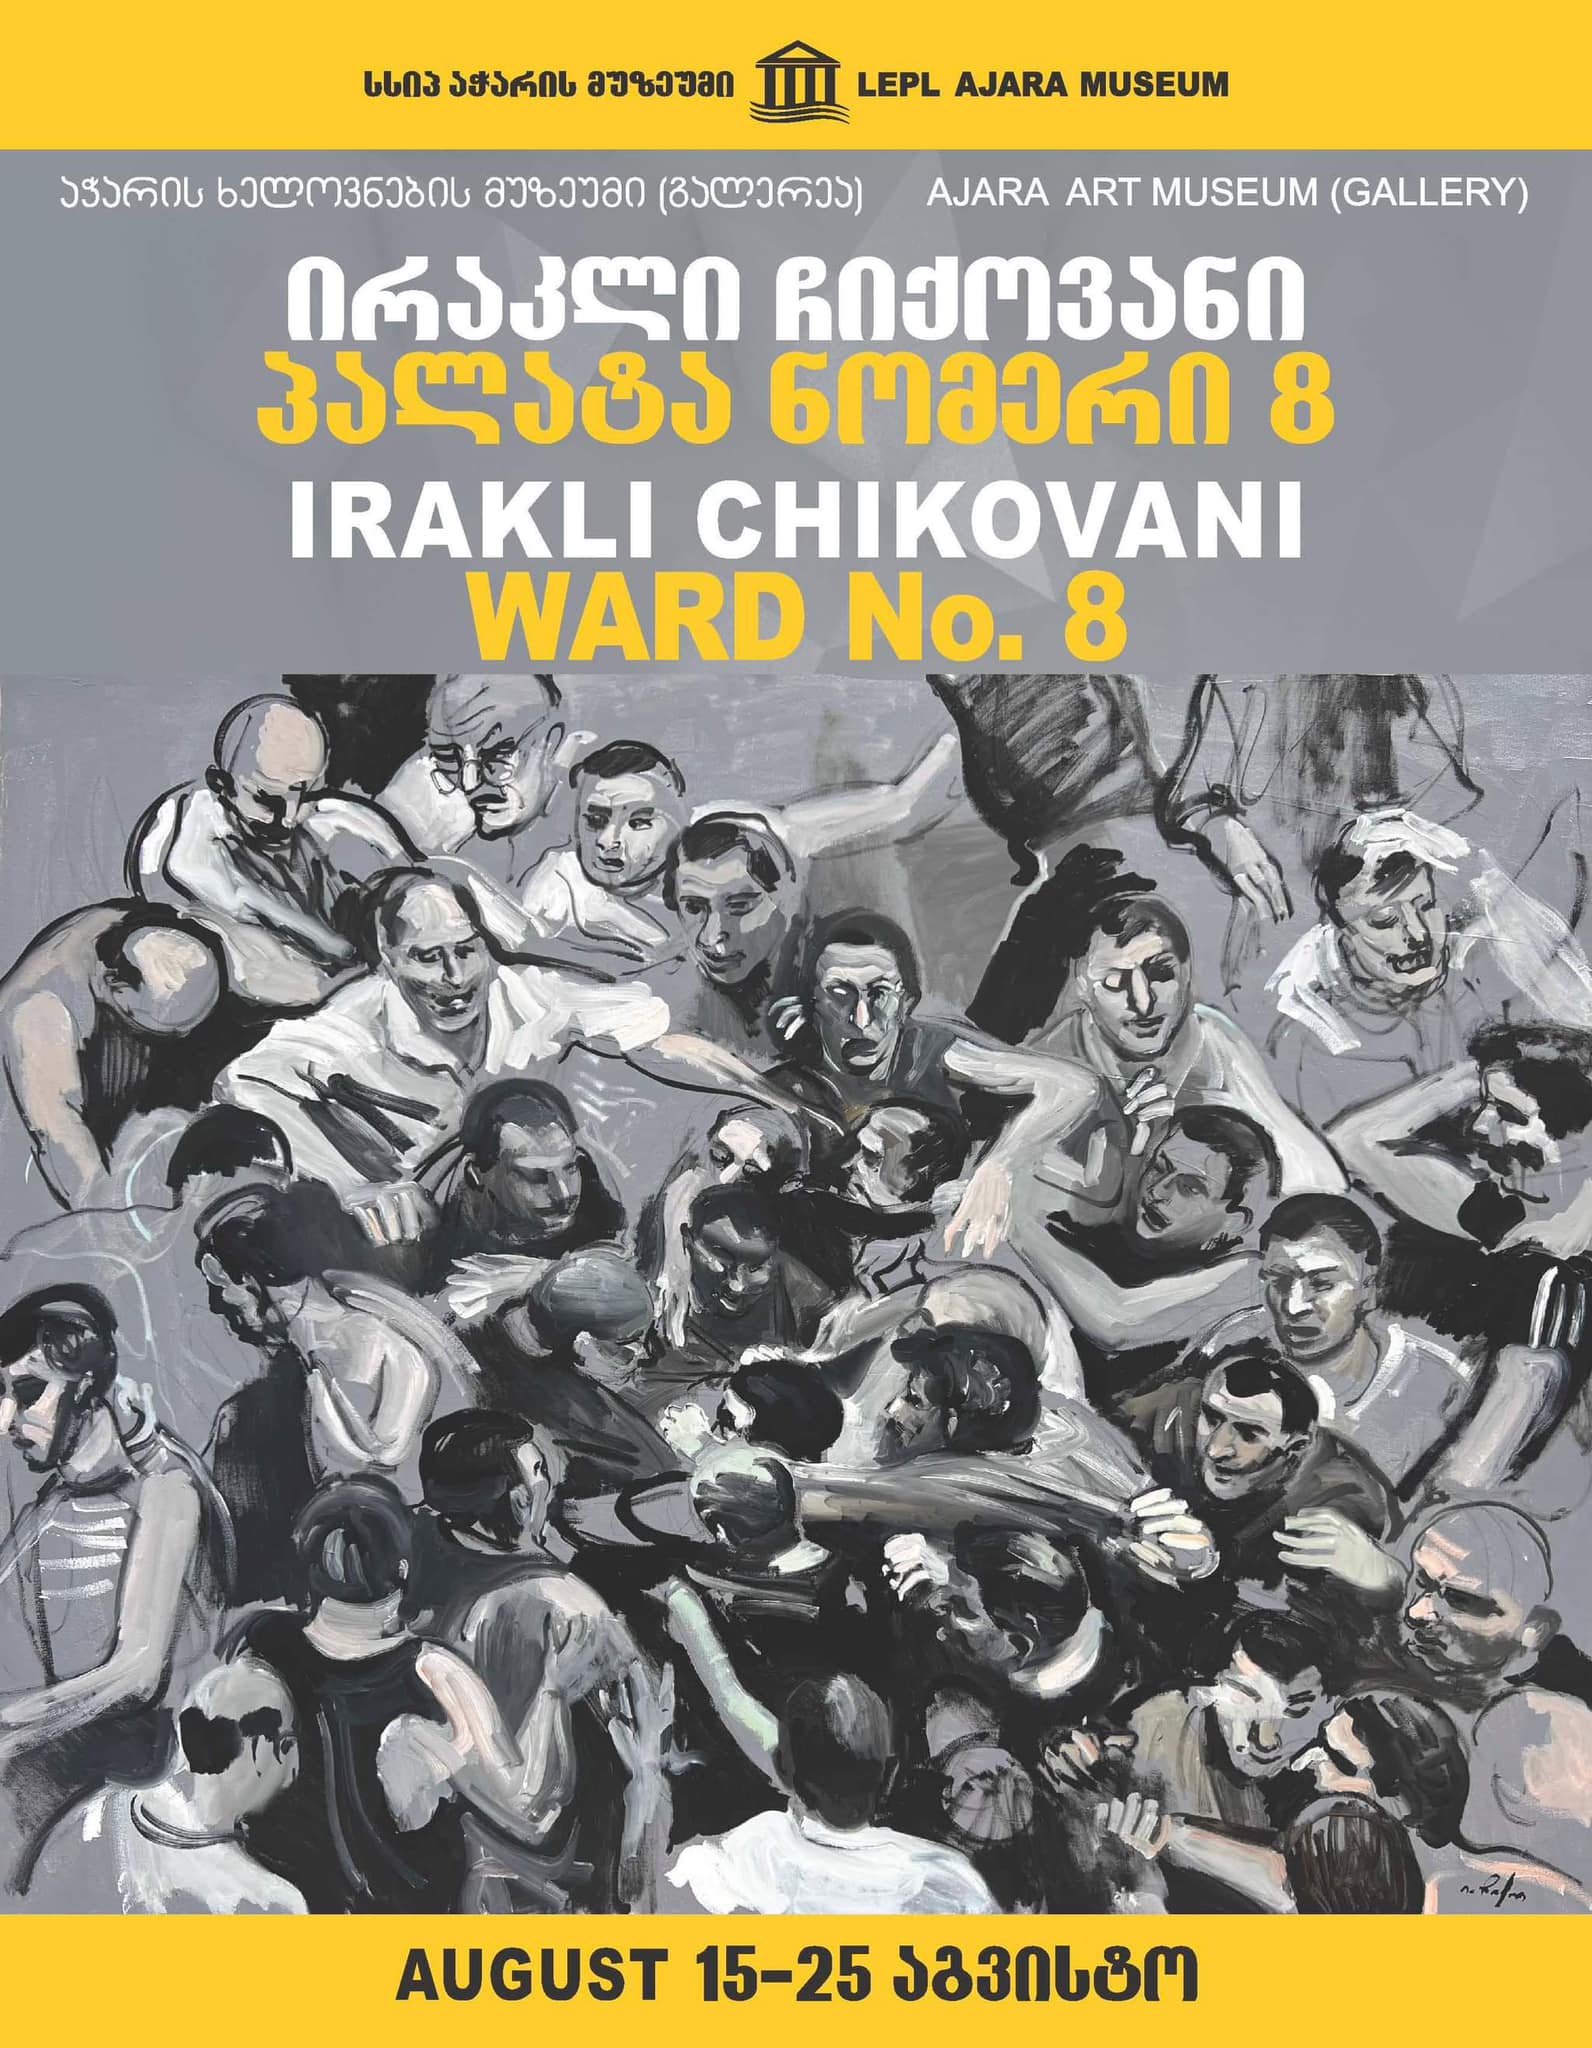 Irakli Chikovani - Personal exhibition "WARD № 8".